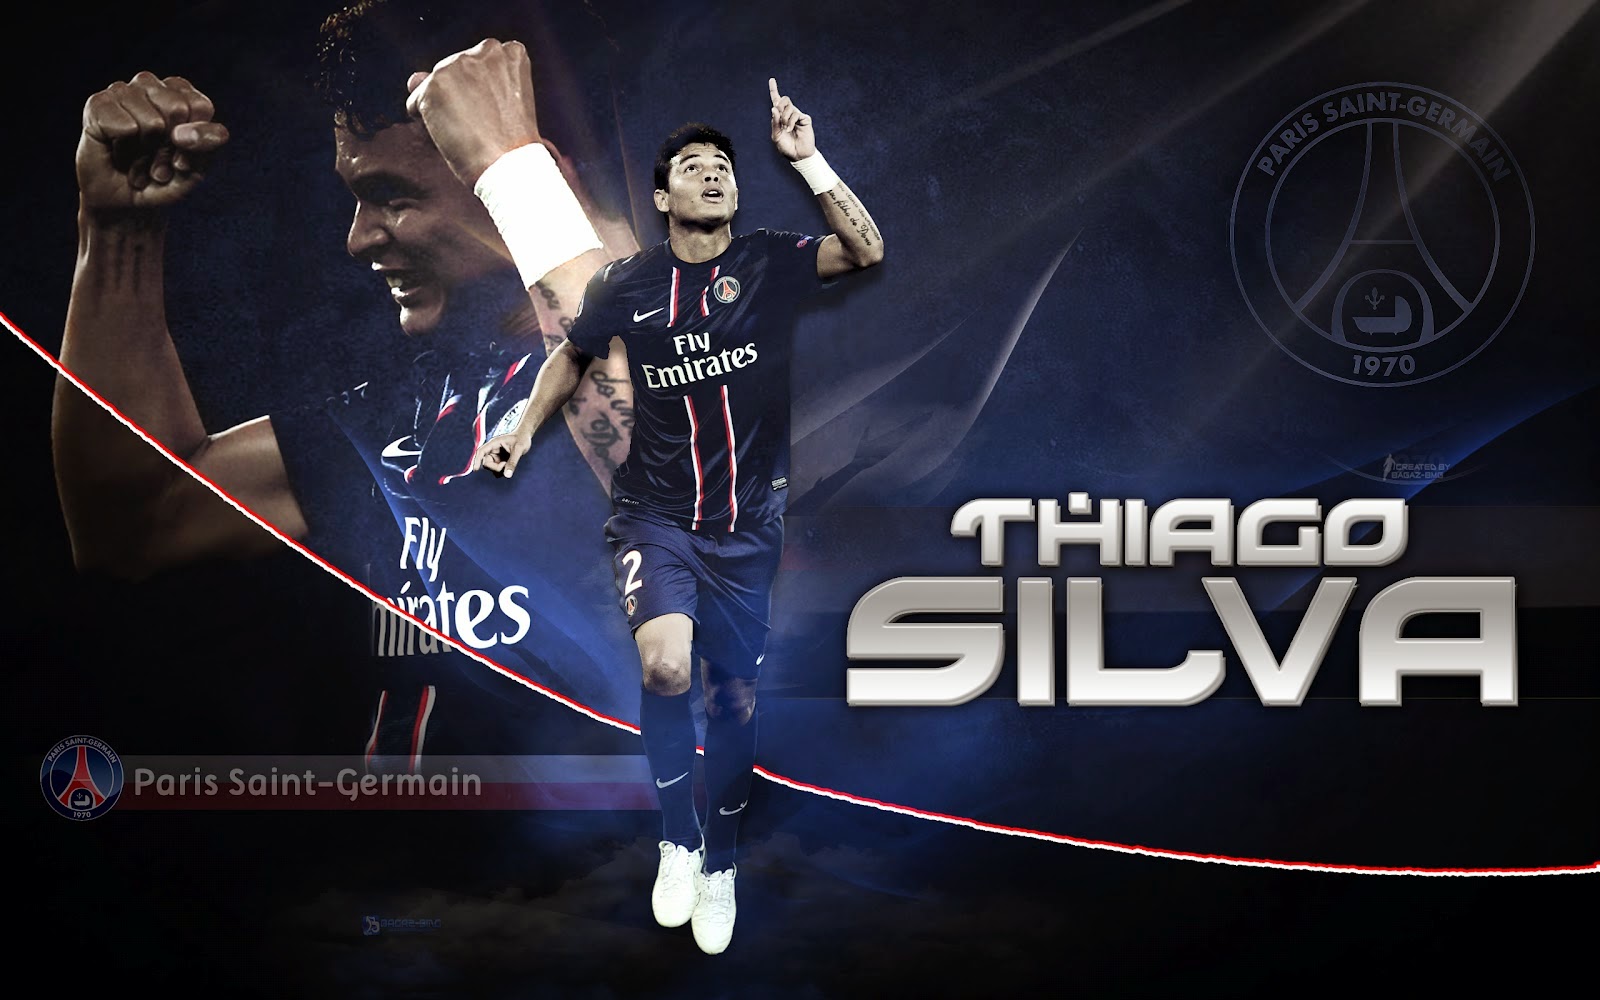 ALL SPORTS PLAYERS: Thiago Silva hd Wallpapers 2014